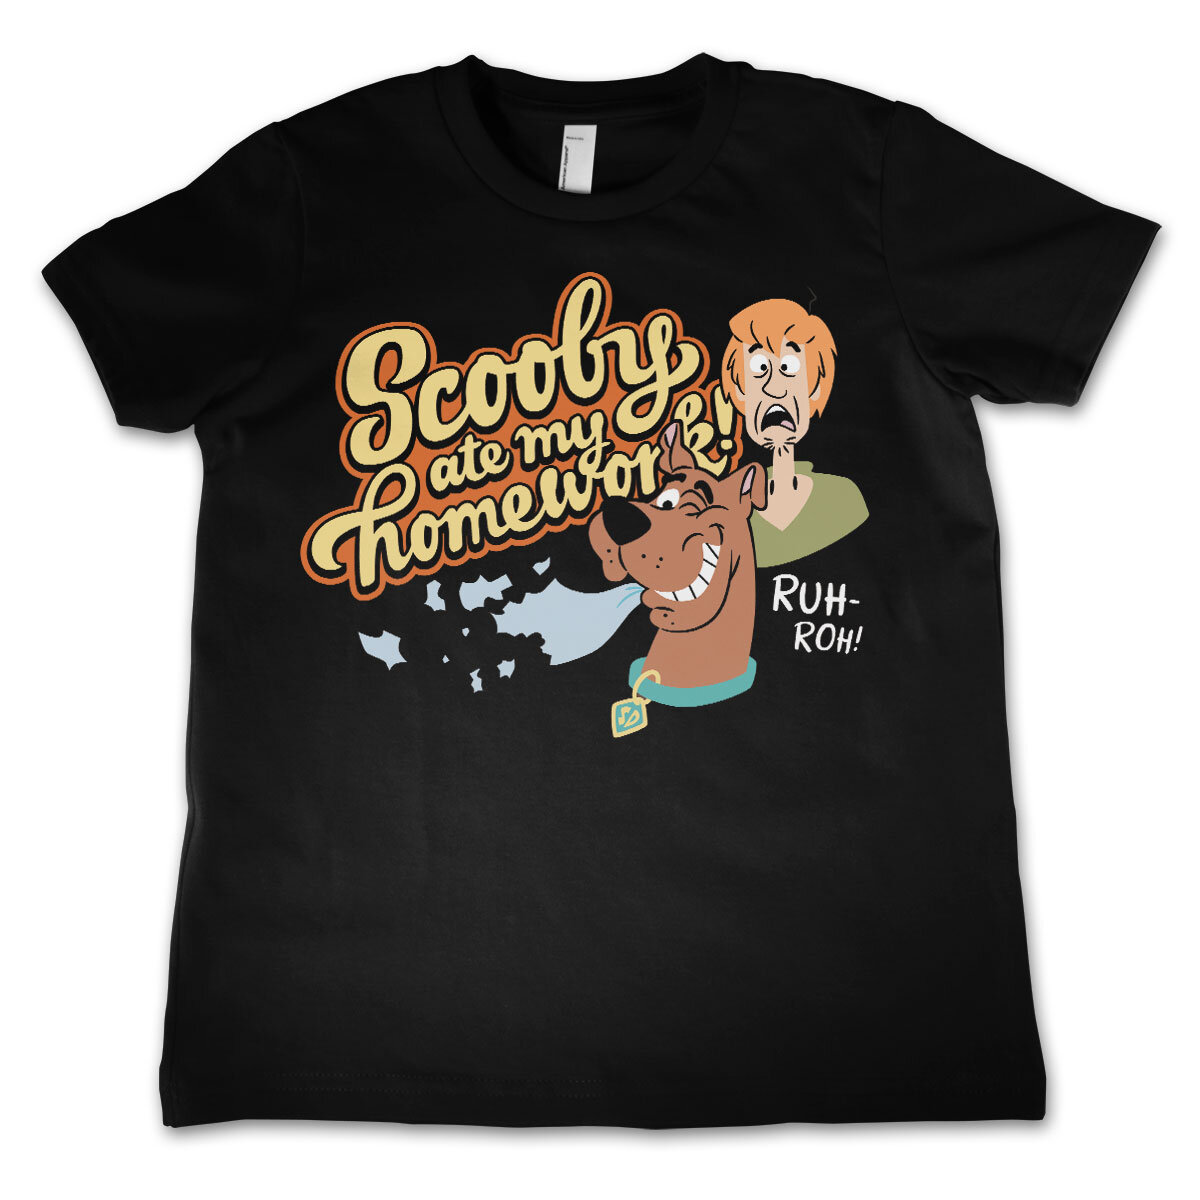 Scooby Ate My Homework Kids T-Shirt